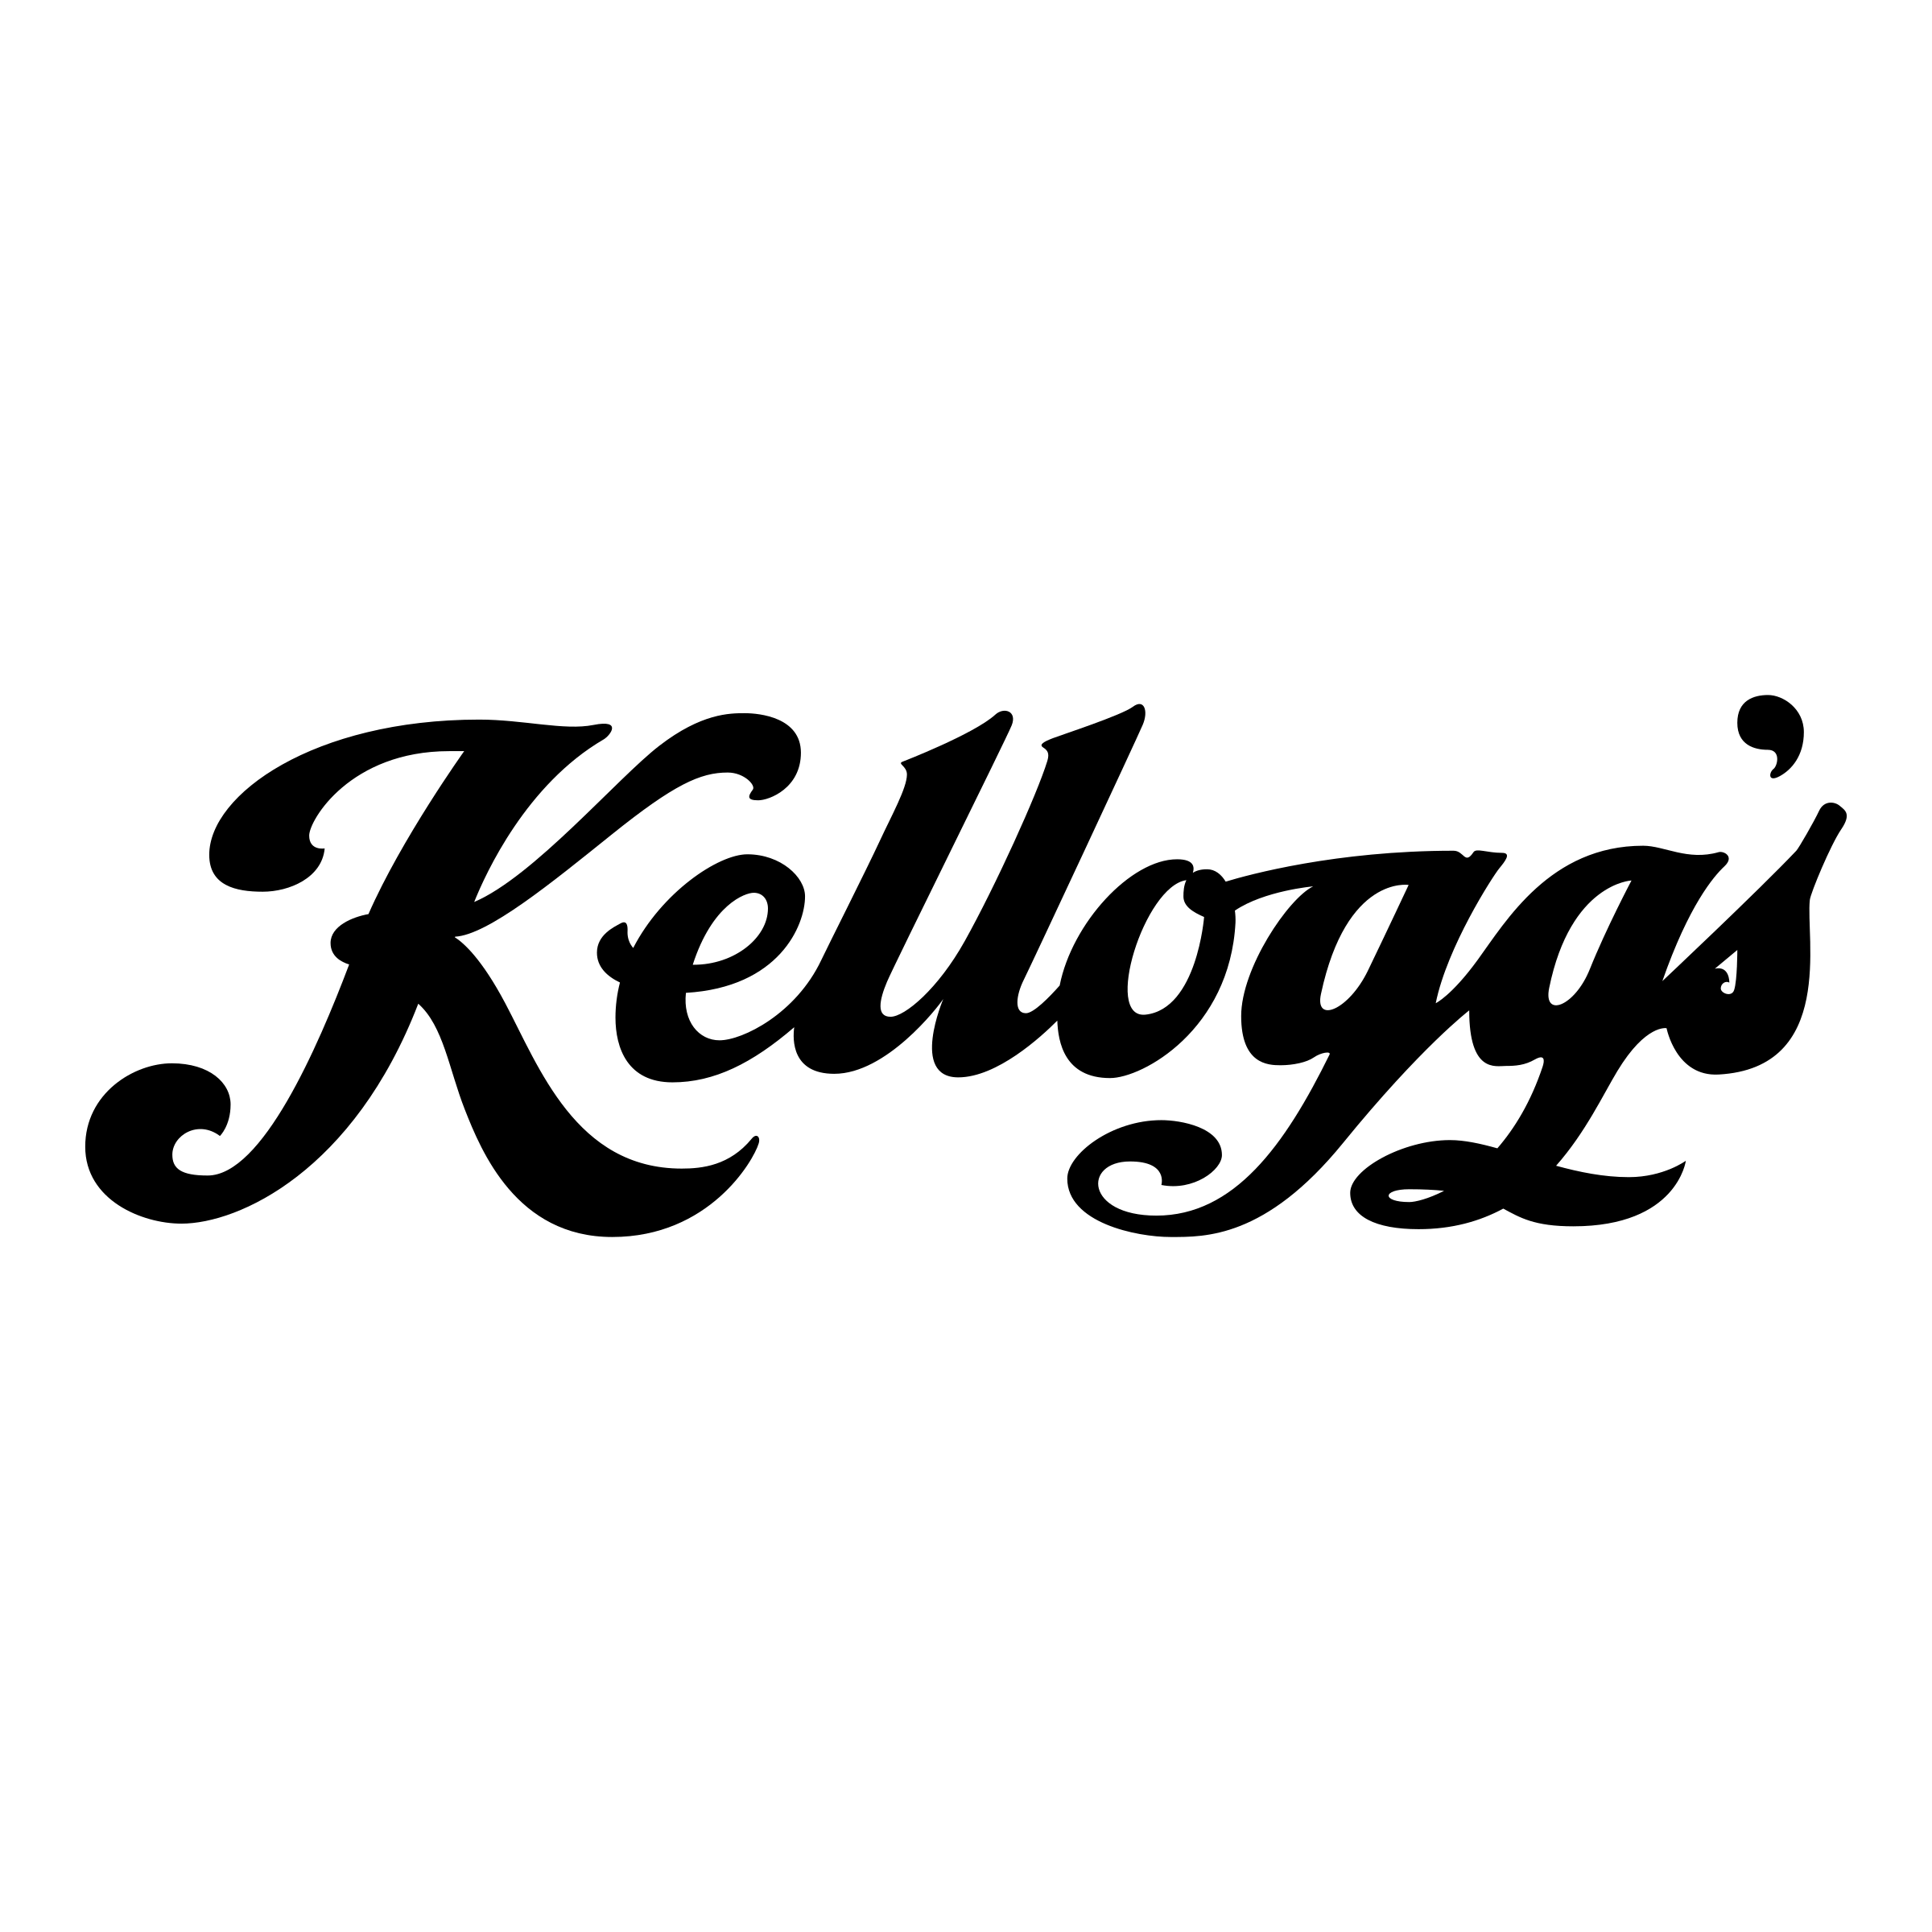 Kellogs Logo - Kellogg's Logo PNG Transparent & SVG Vector - Freebie Supply